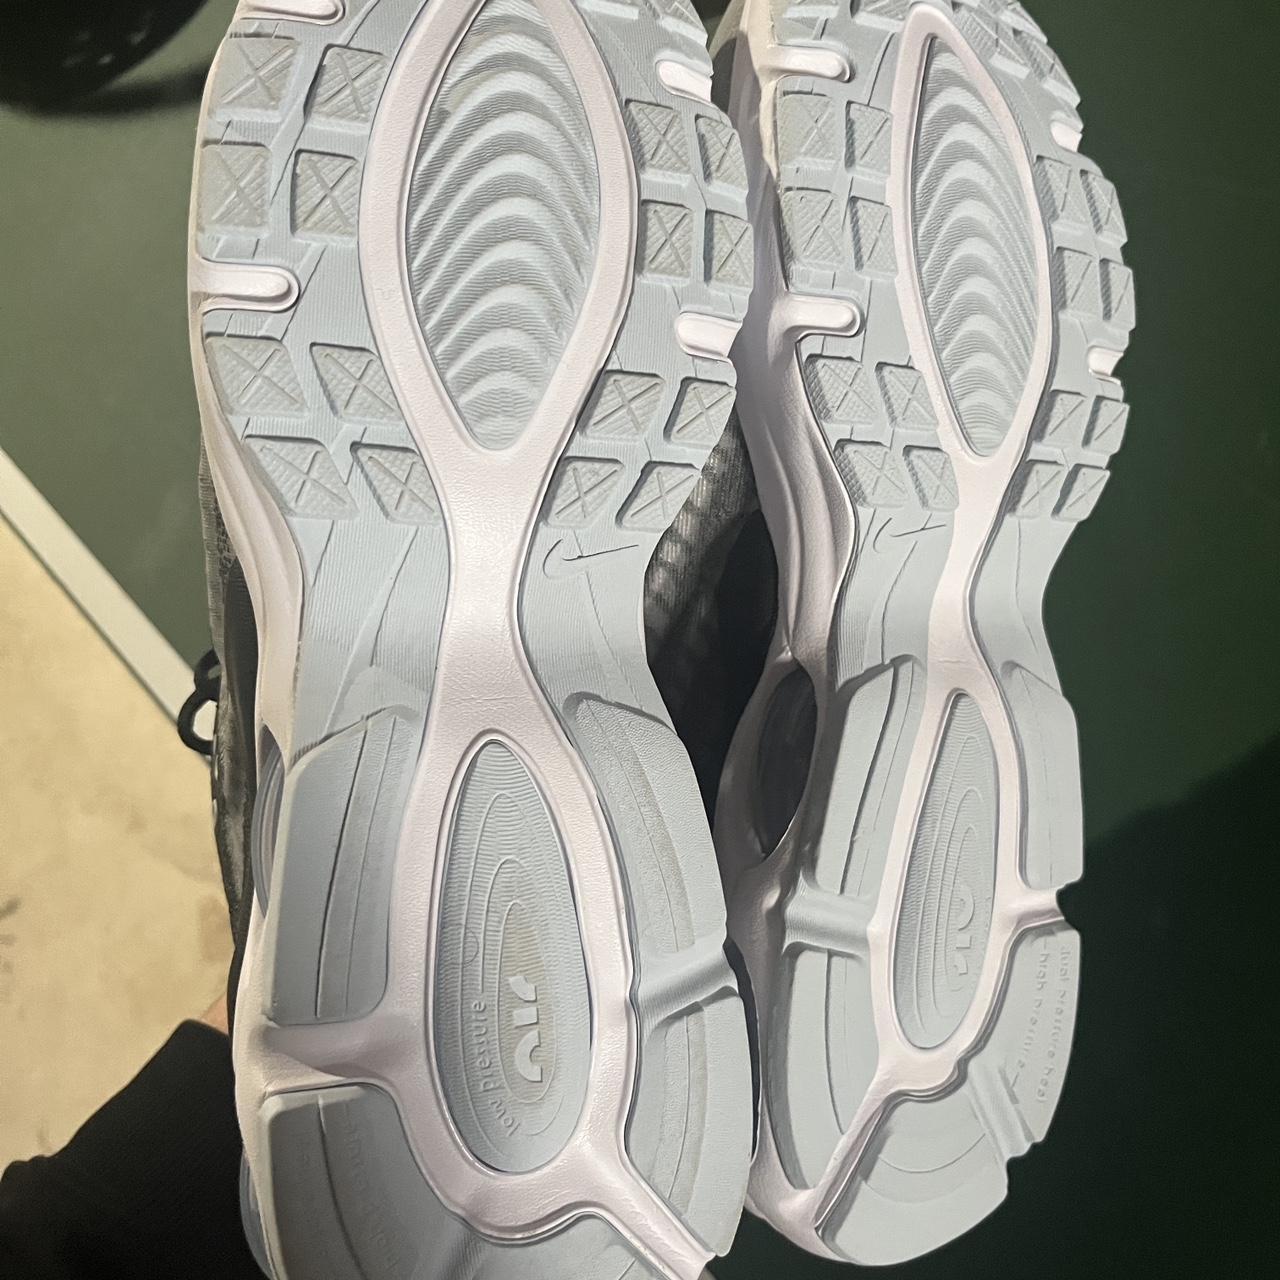 Nike Men's Air Max TW Shoes size 13 364258707007 - Depop